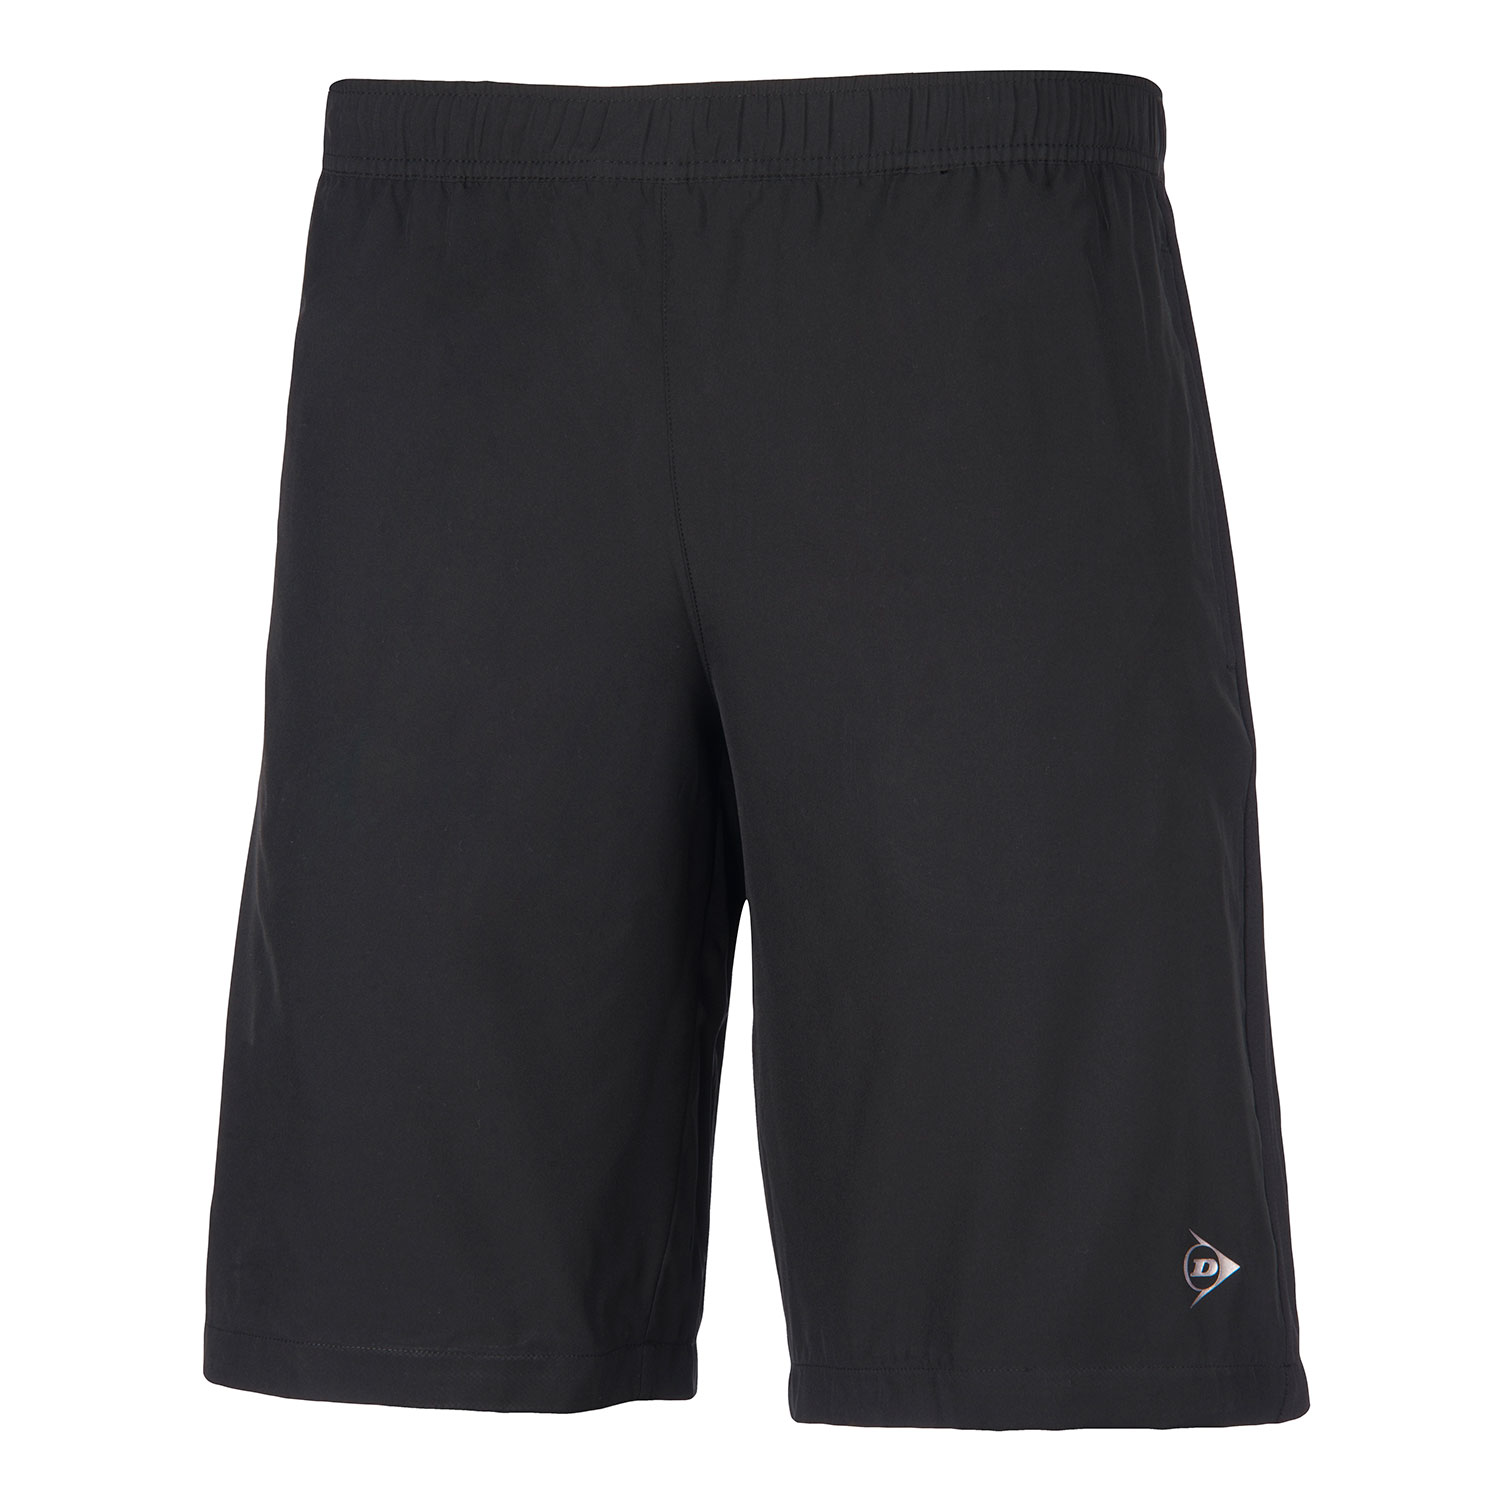 Dunlop Woven Club Boy's Tennis Shorts - Black